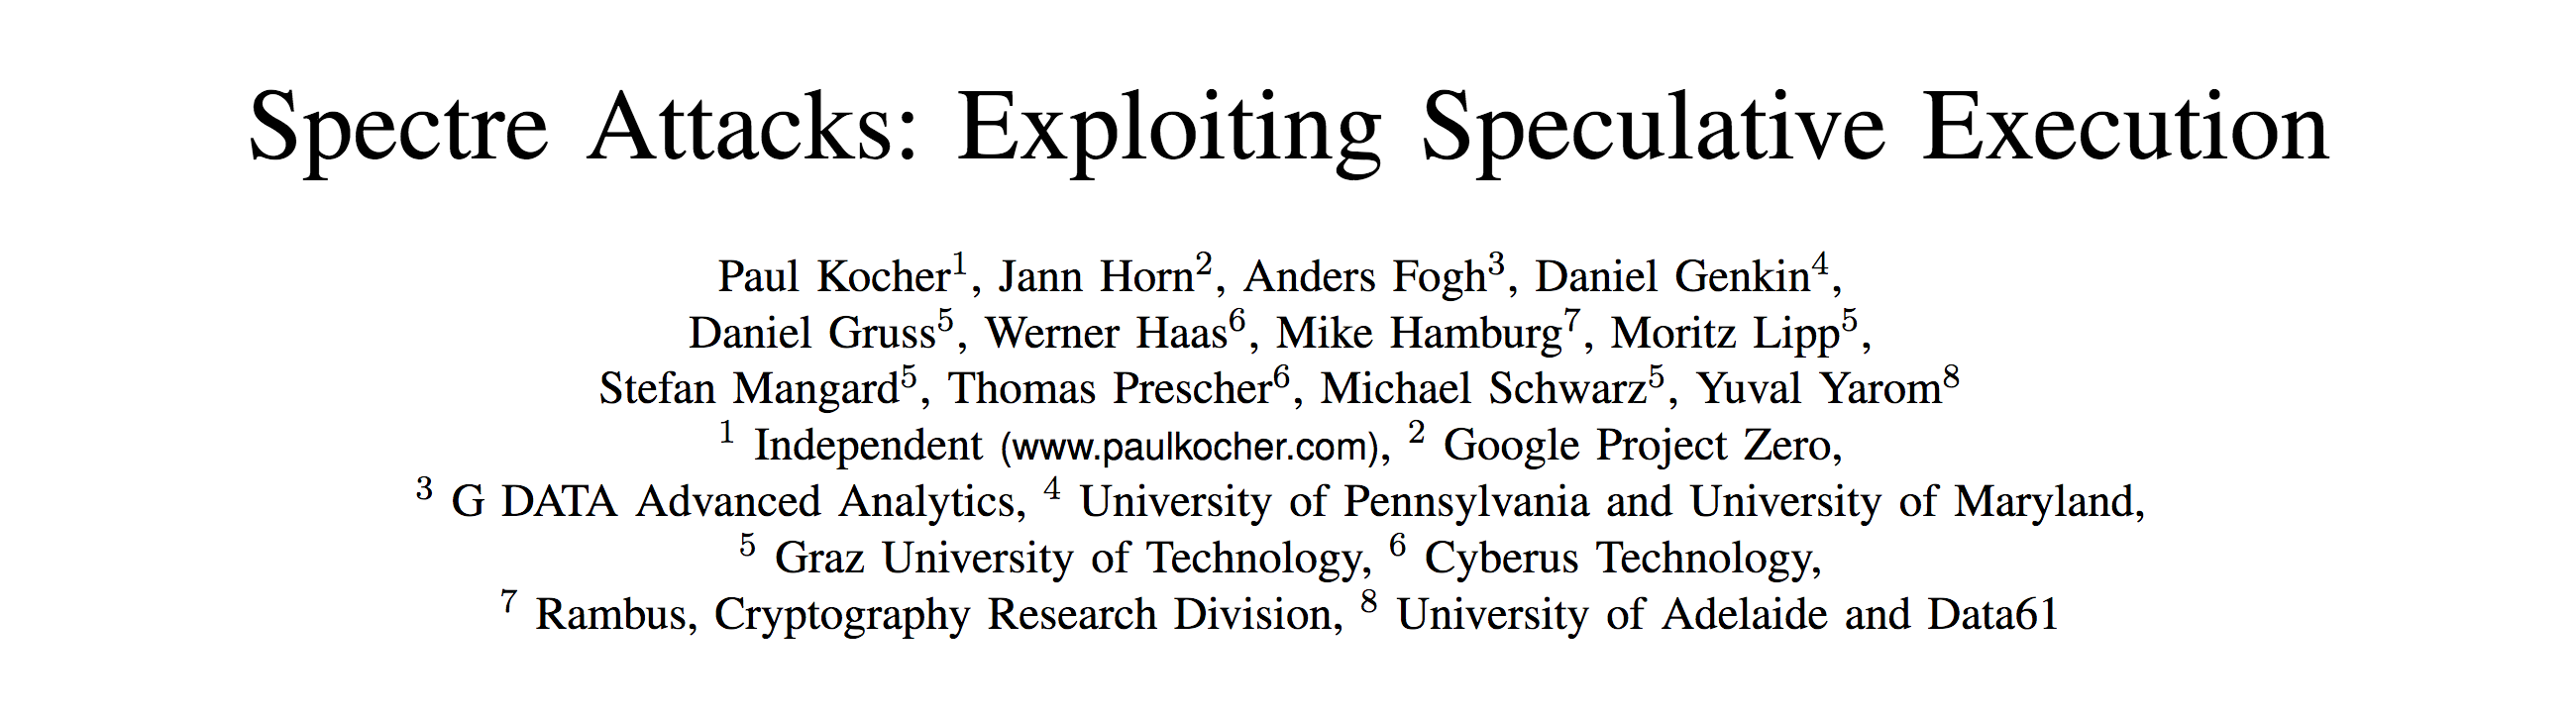 Spectre Attacks: Exploiting Speculative Execution.